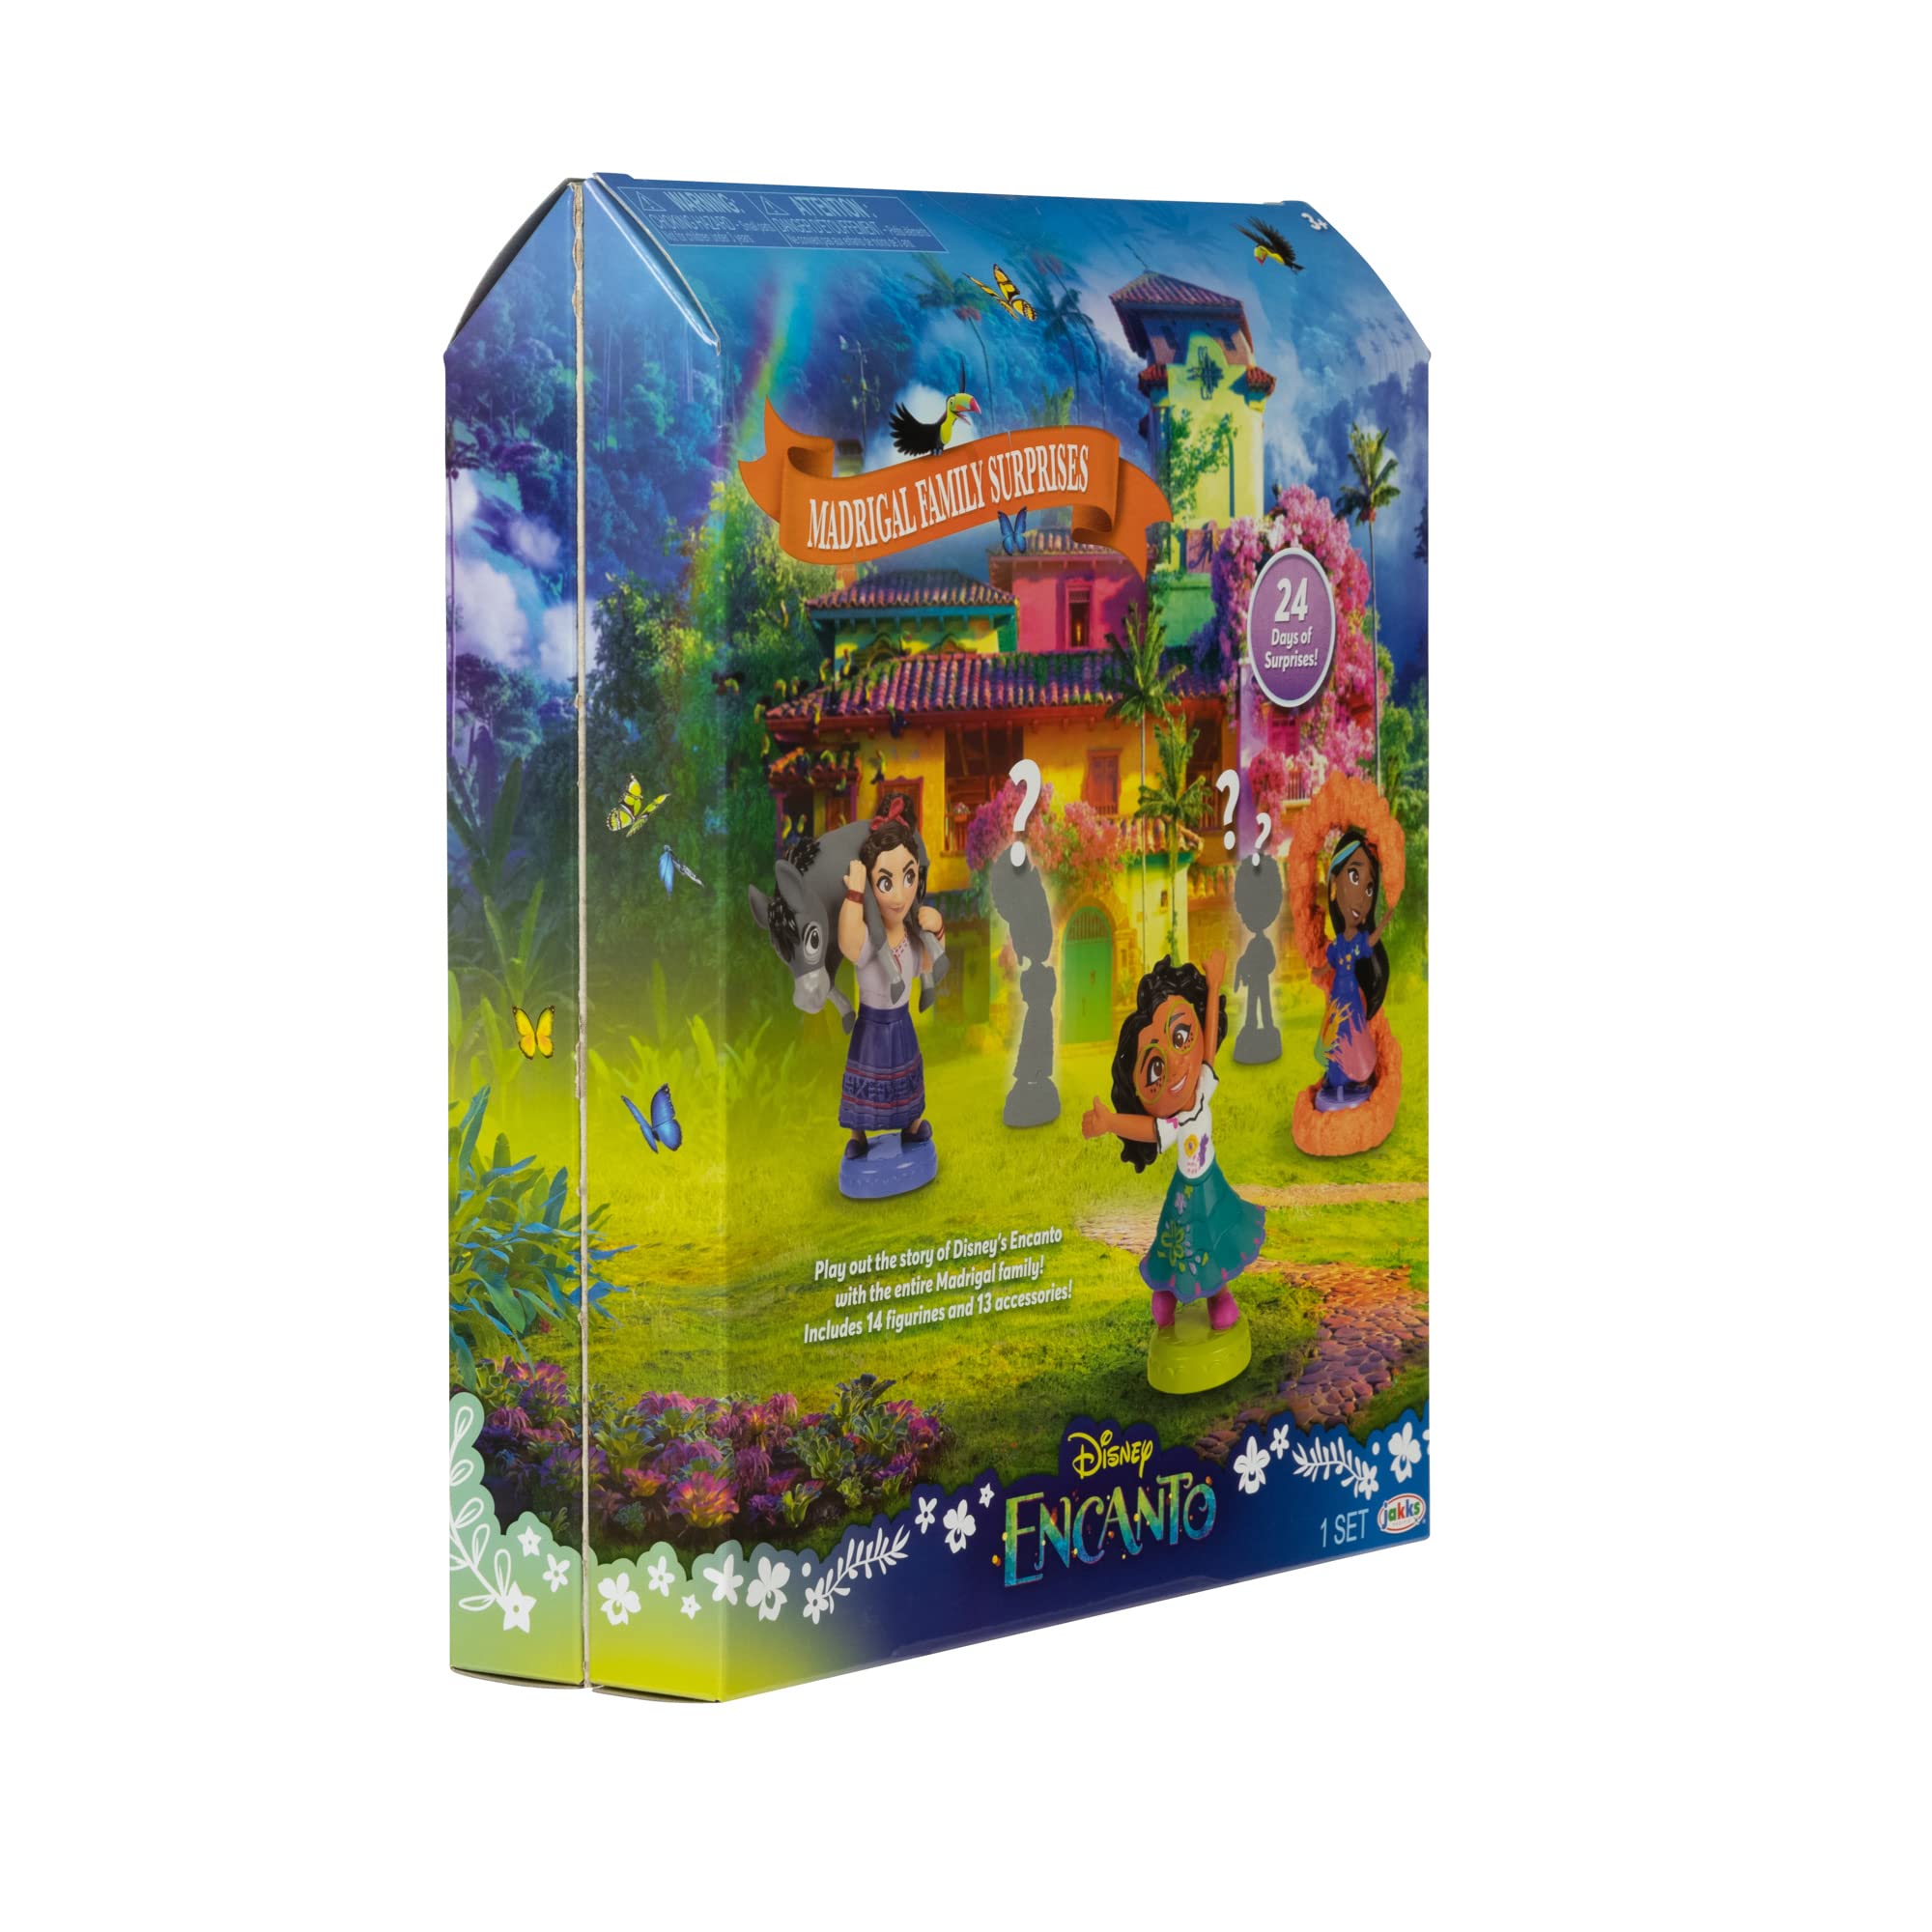 Mua Disney Encanto Casa Madrigal Advent Calendar trên Amazon Mỹ chính